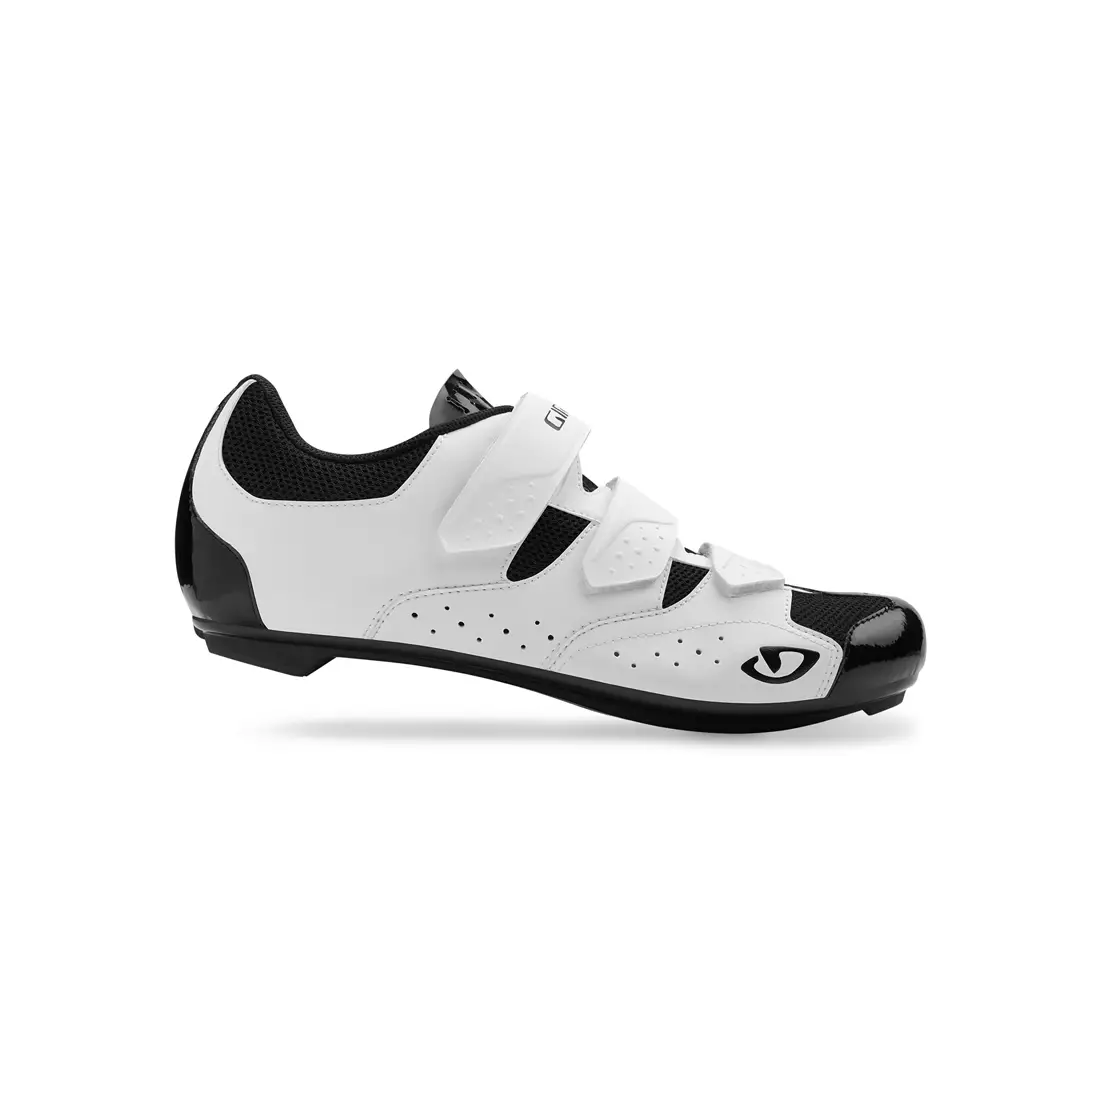 GIRO TECHNE - pantofi de ciclism pentru bărbați white/black